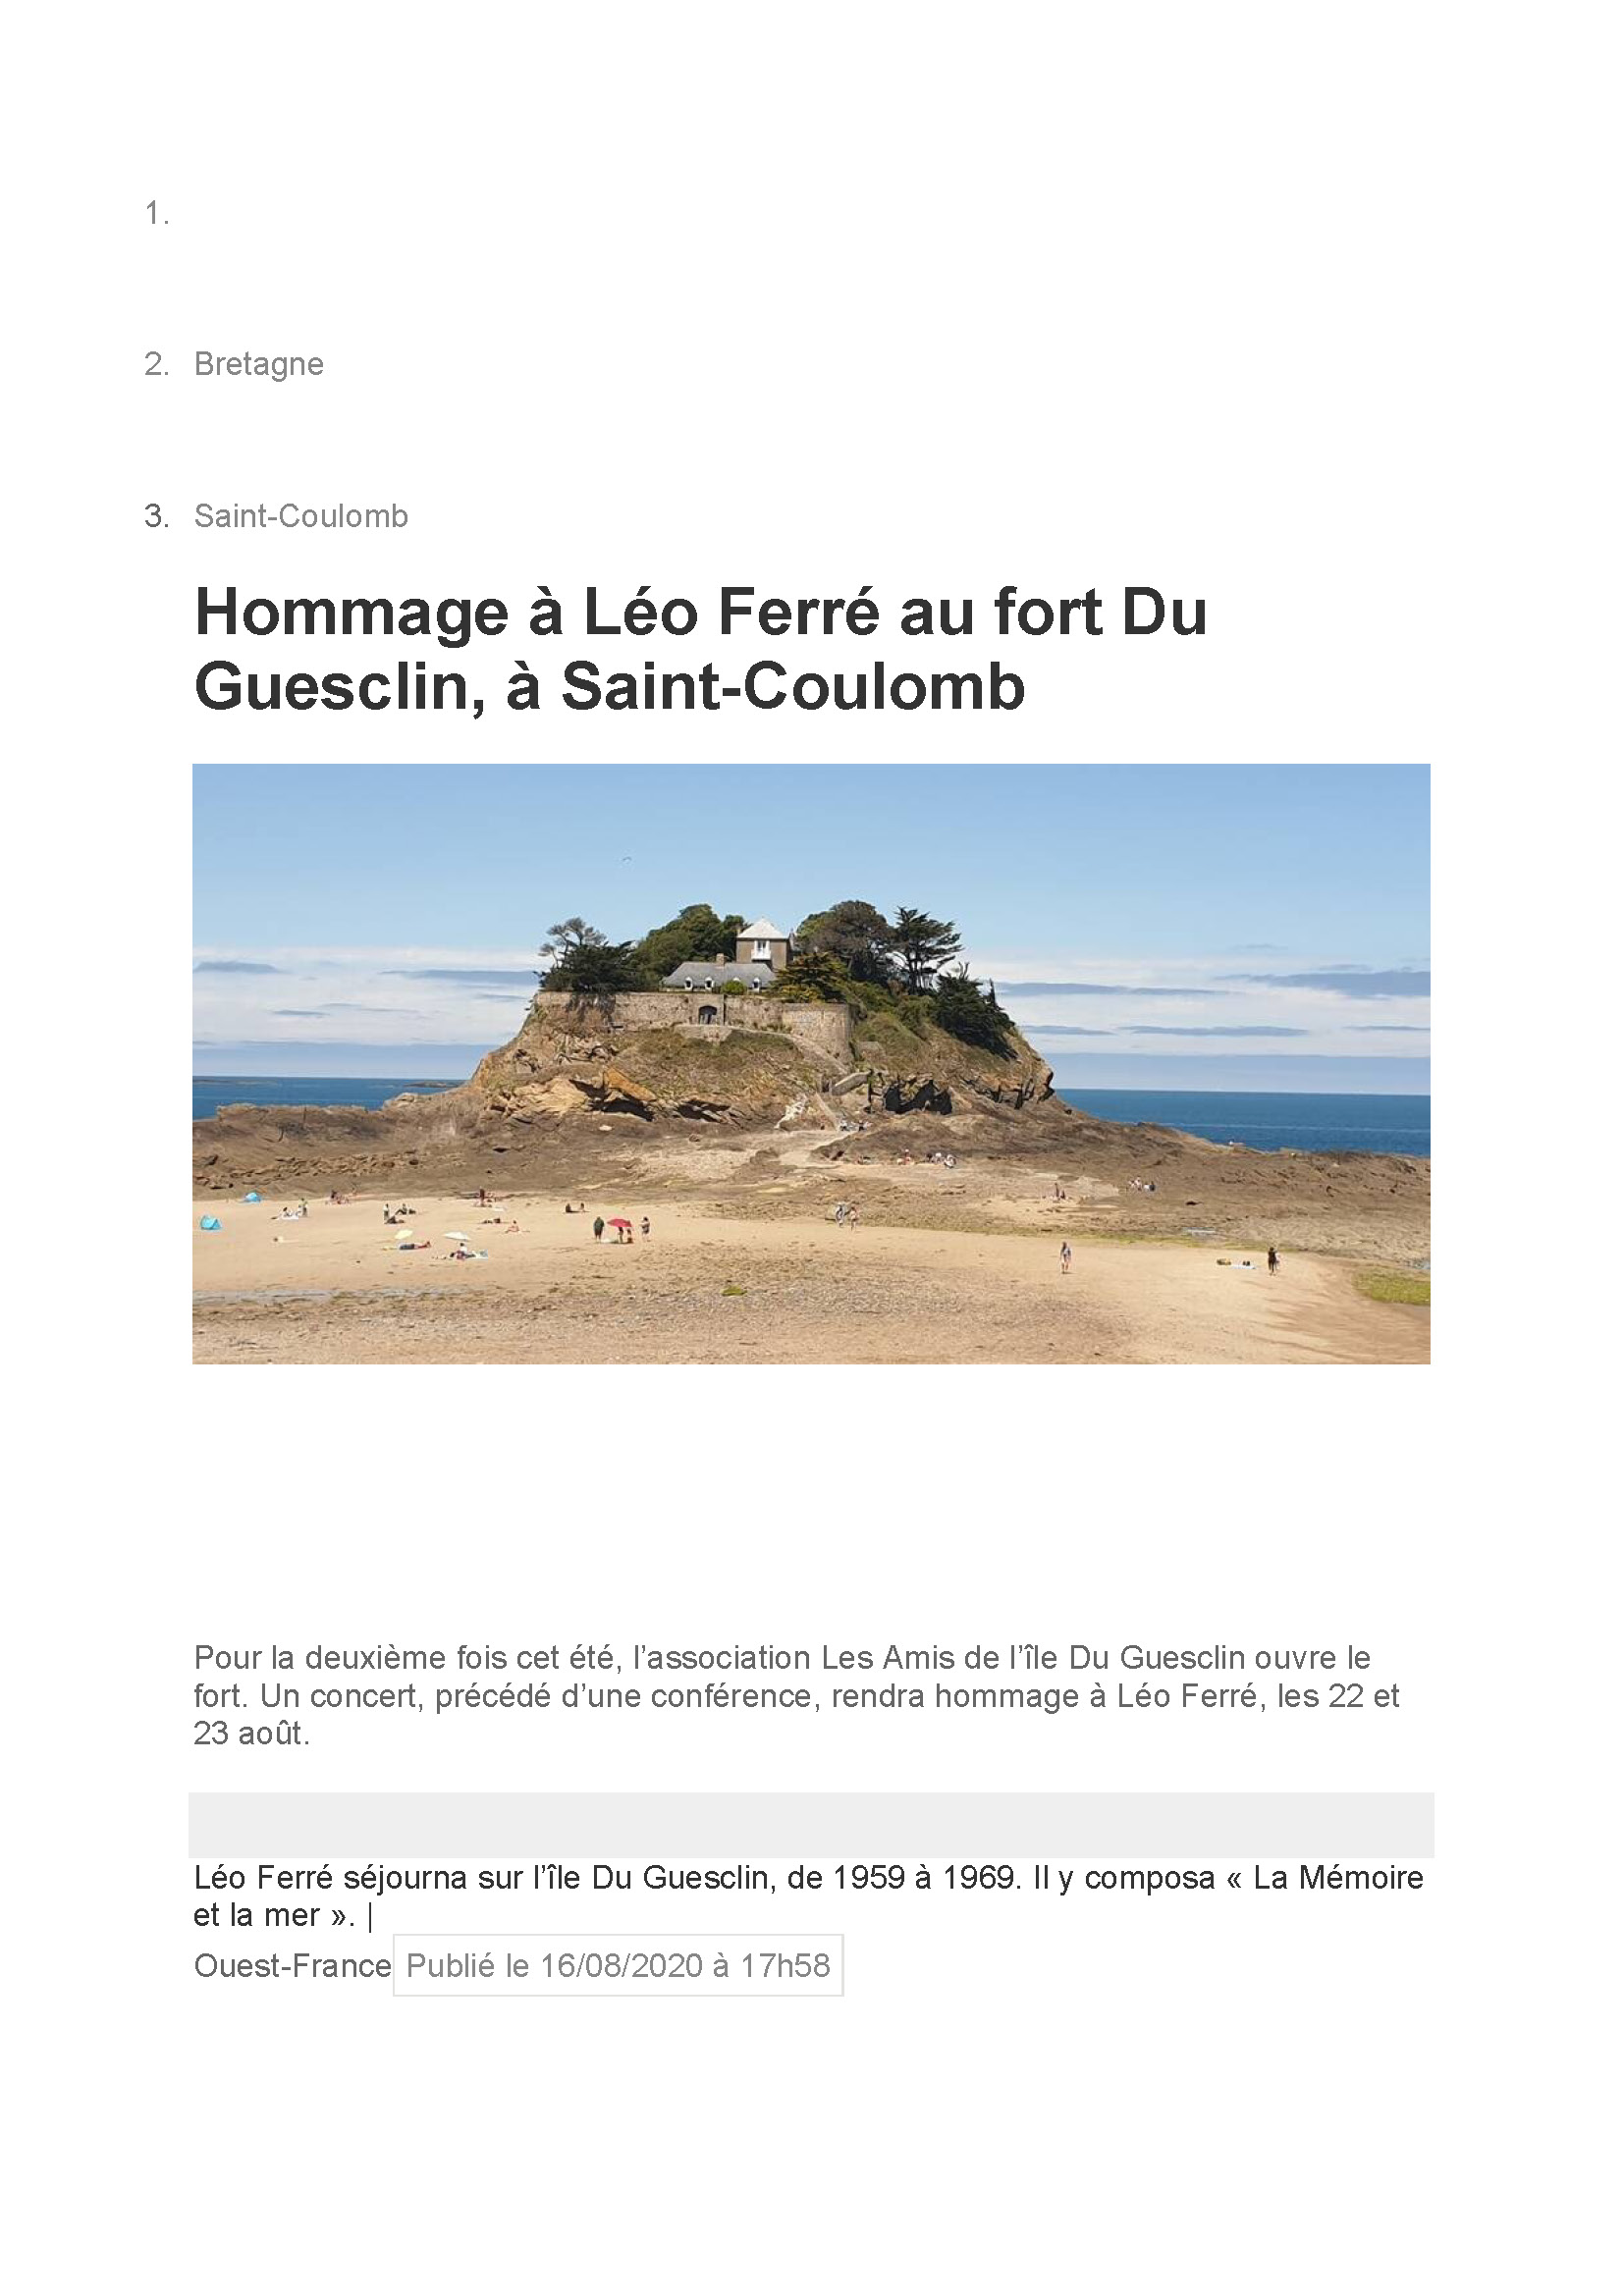 16/08/2020 Guesclin hommage à Léo Ferré